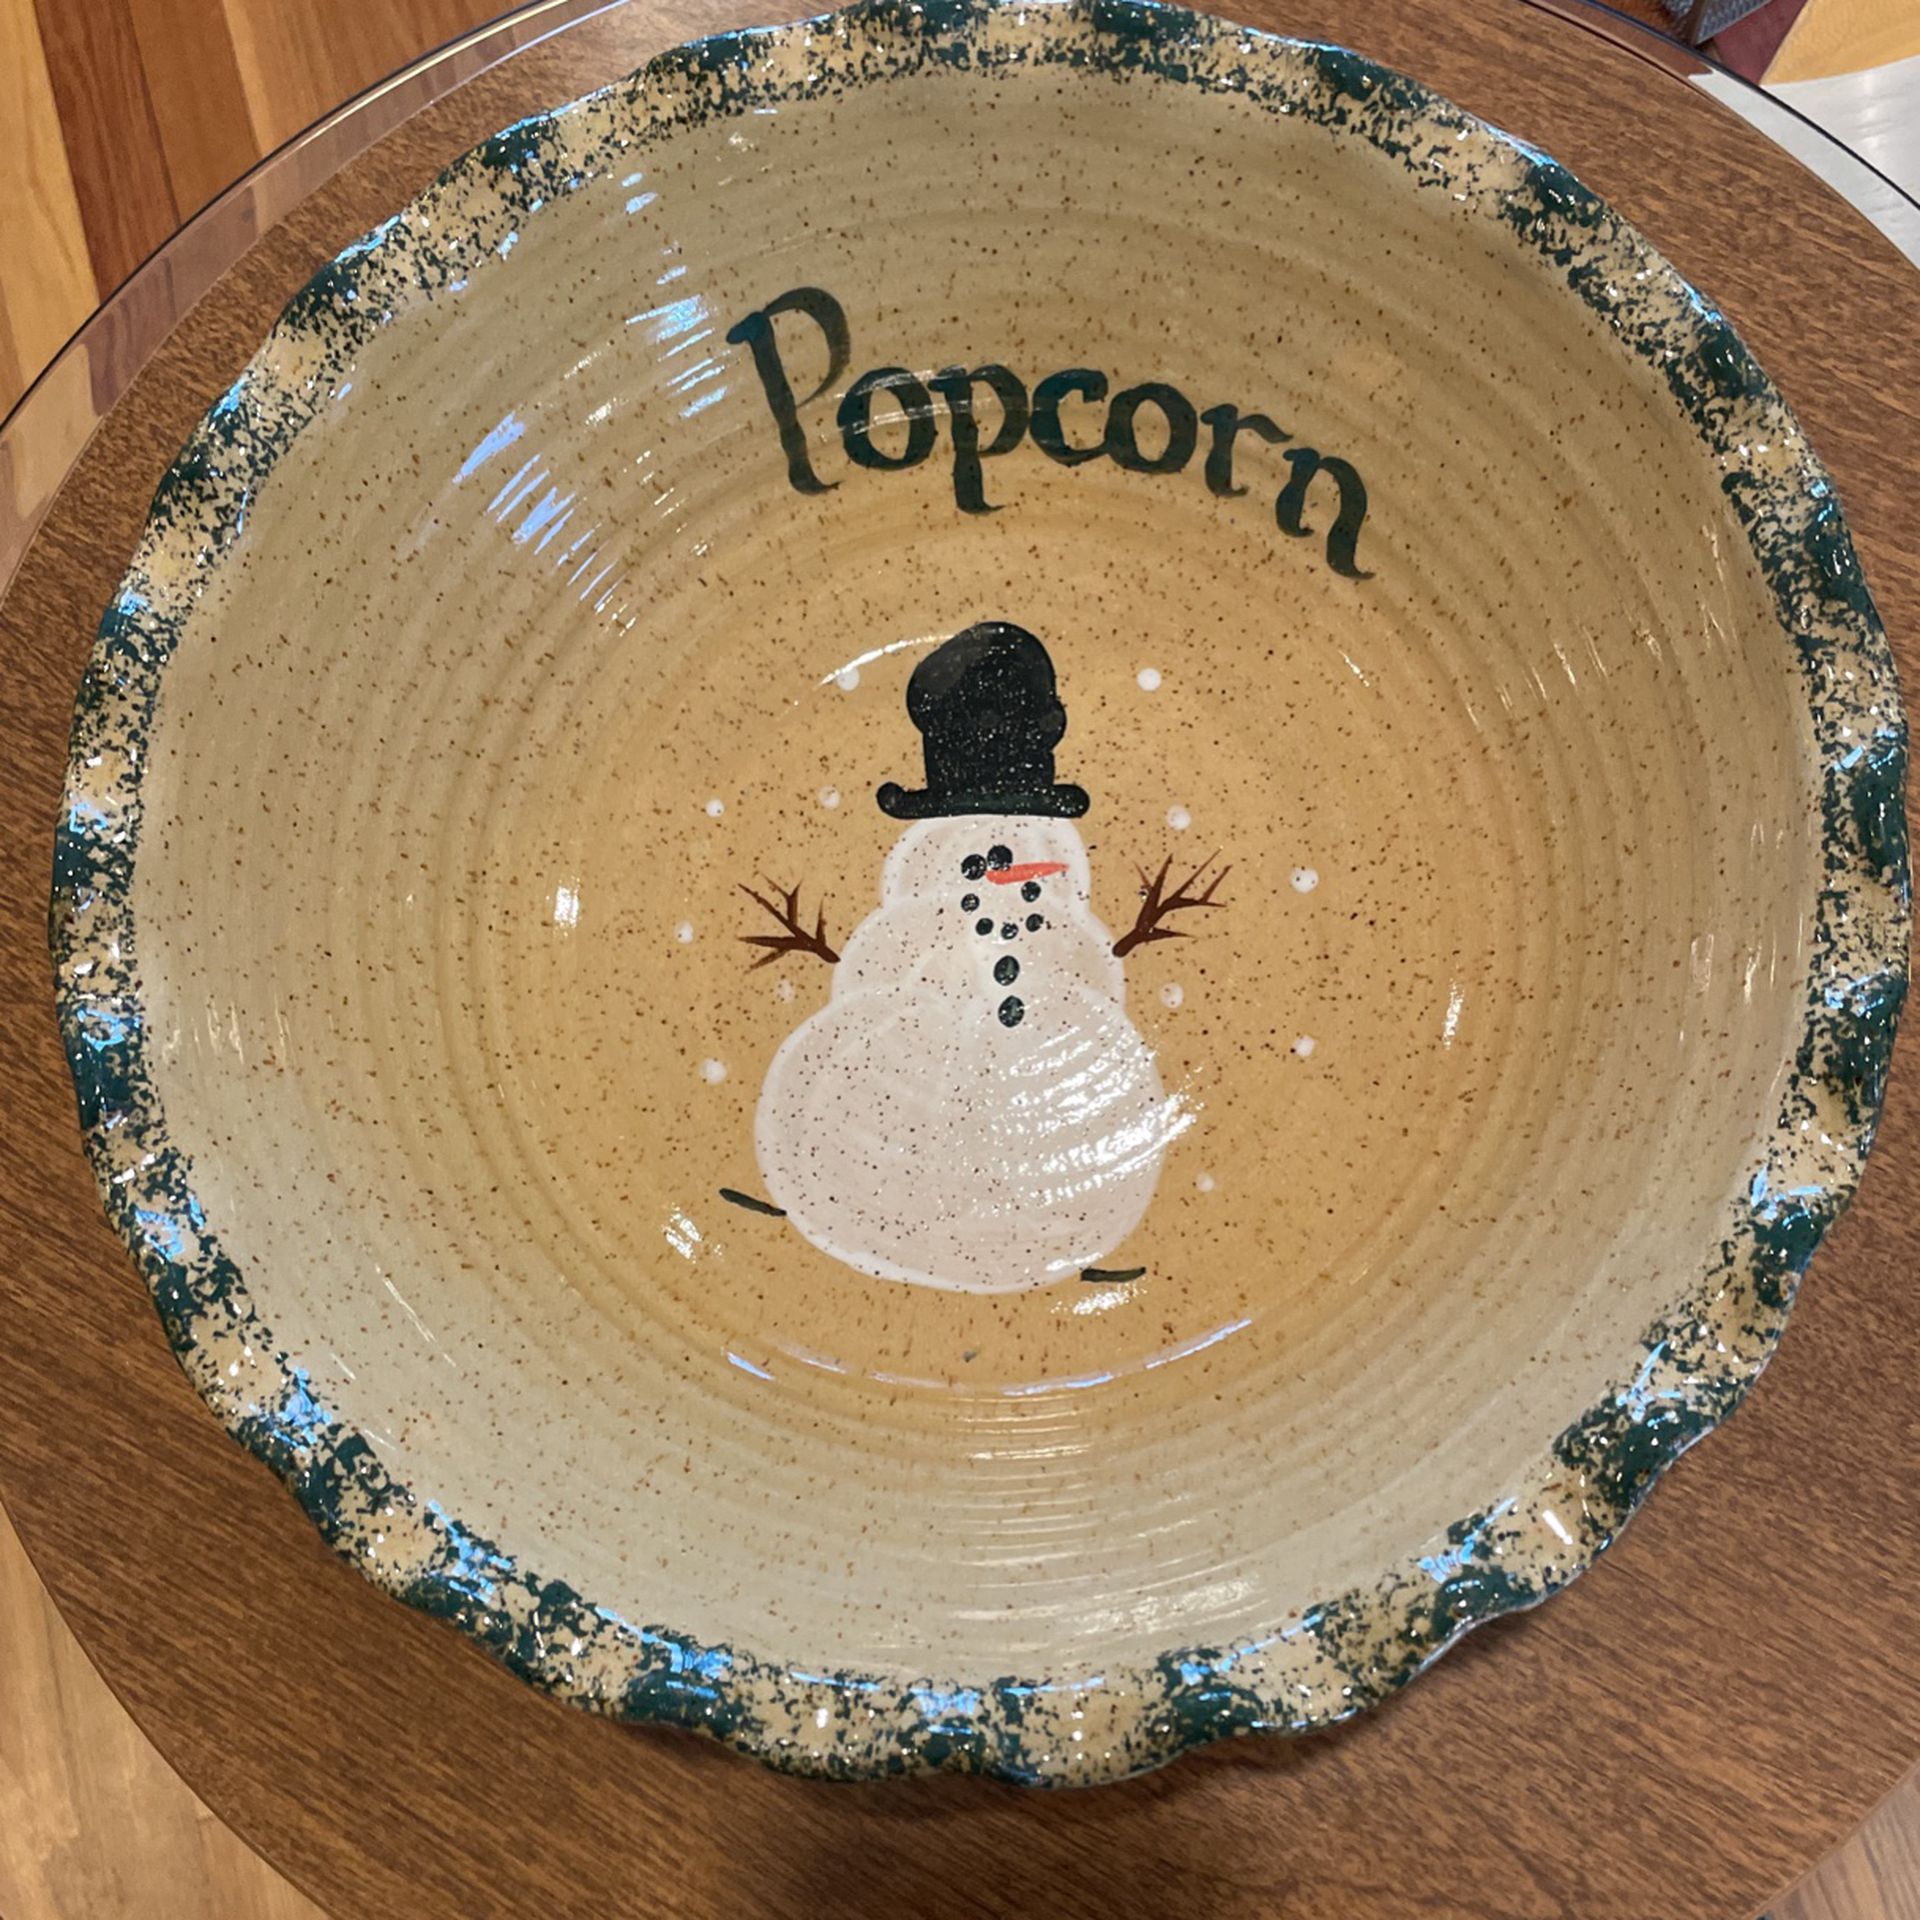 13” W Snowman Popcorn Bowl New